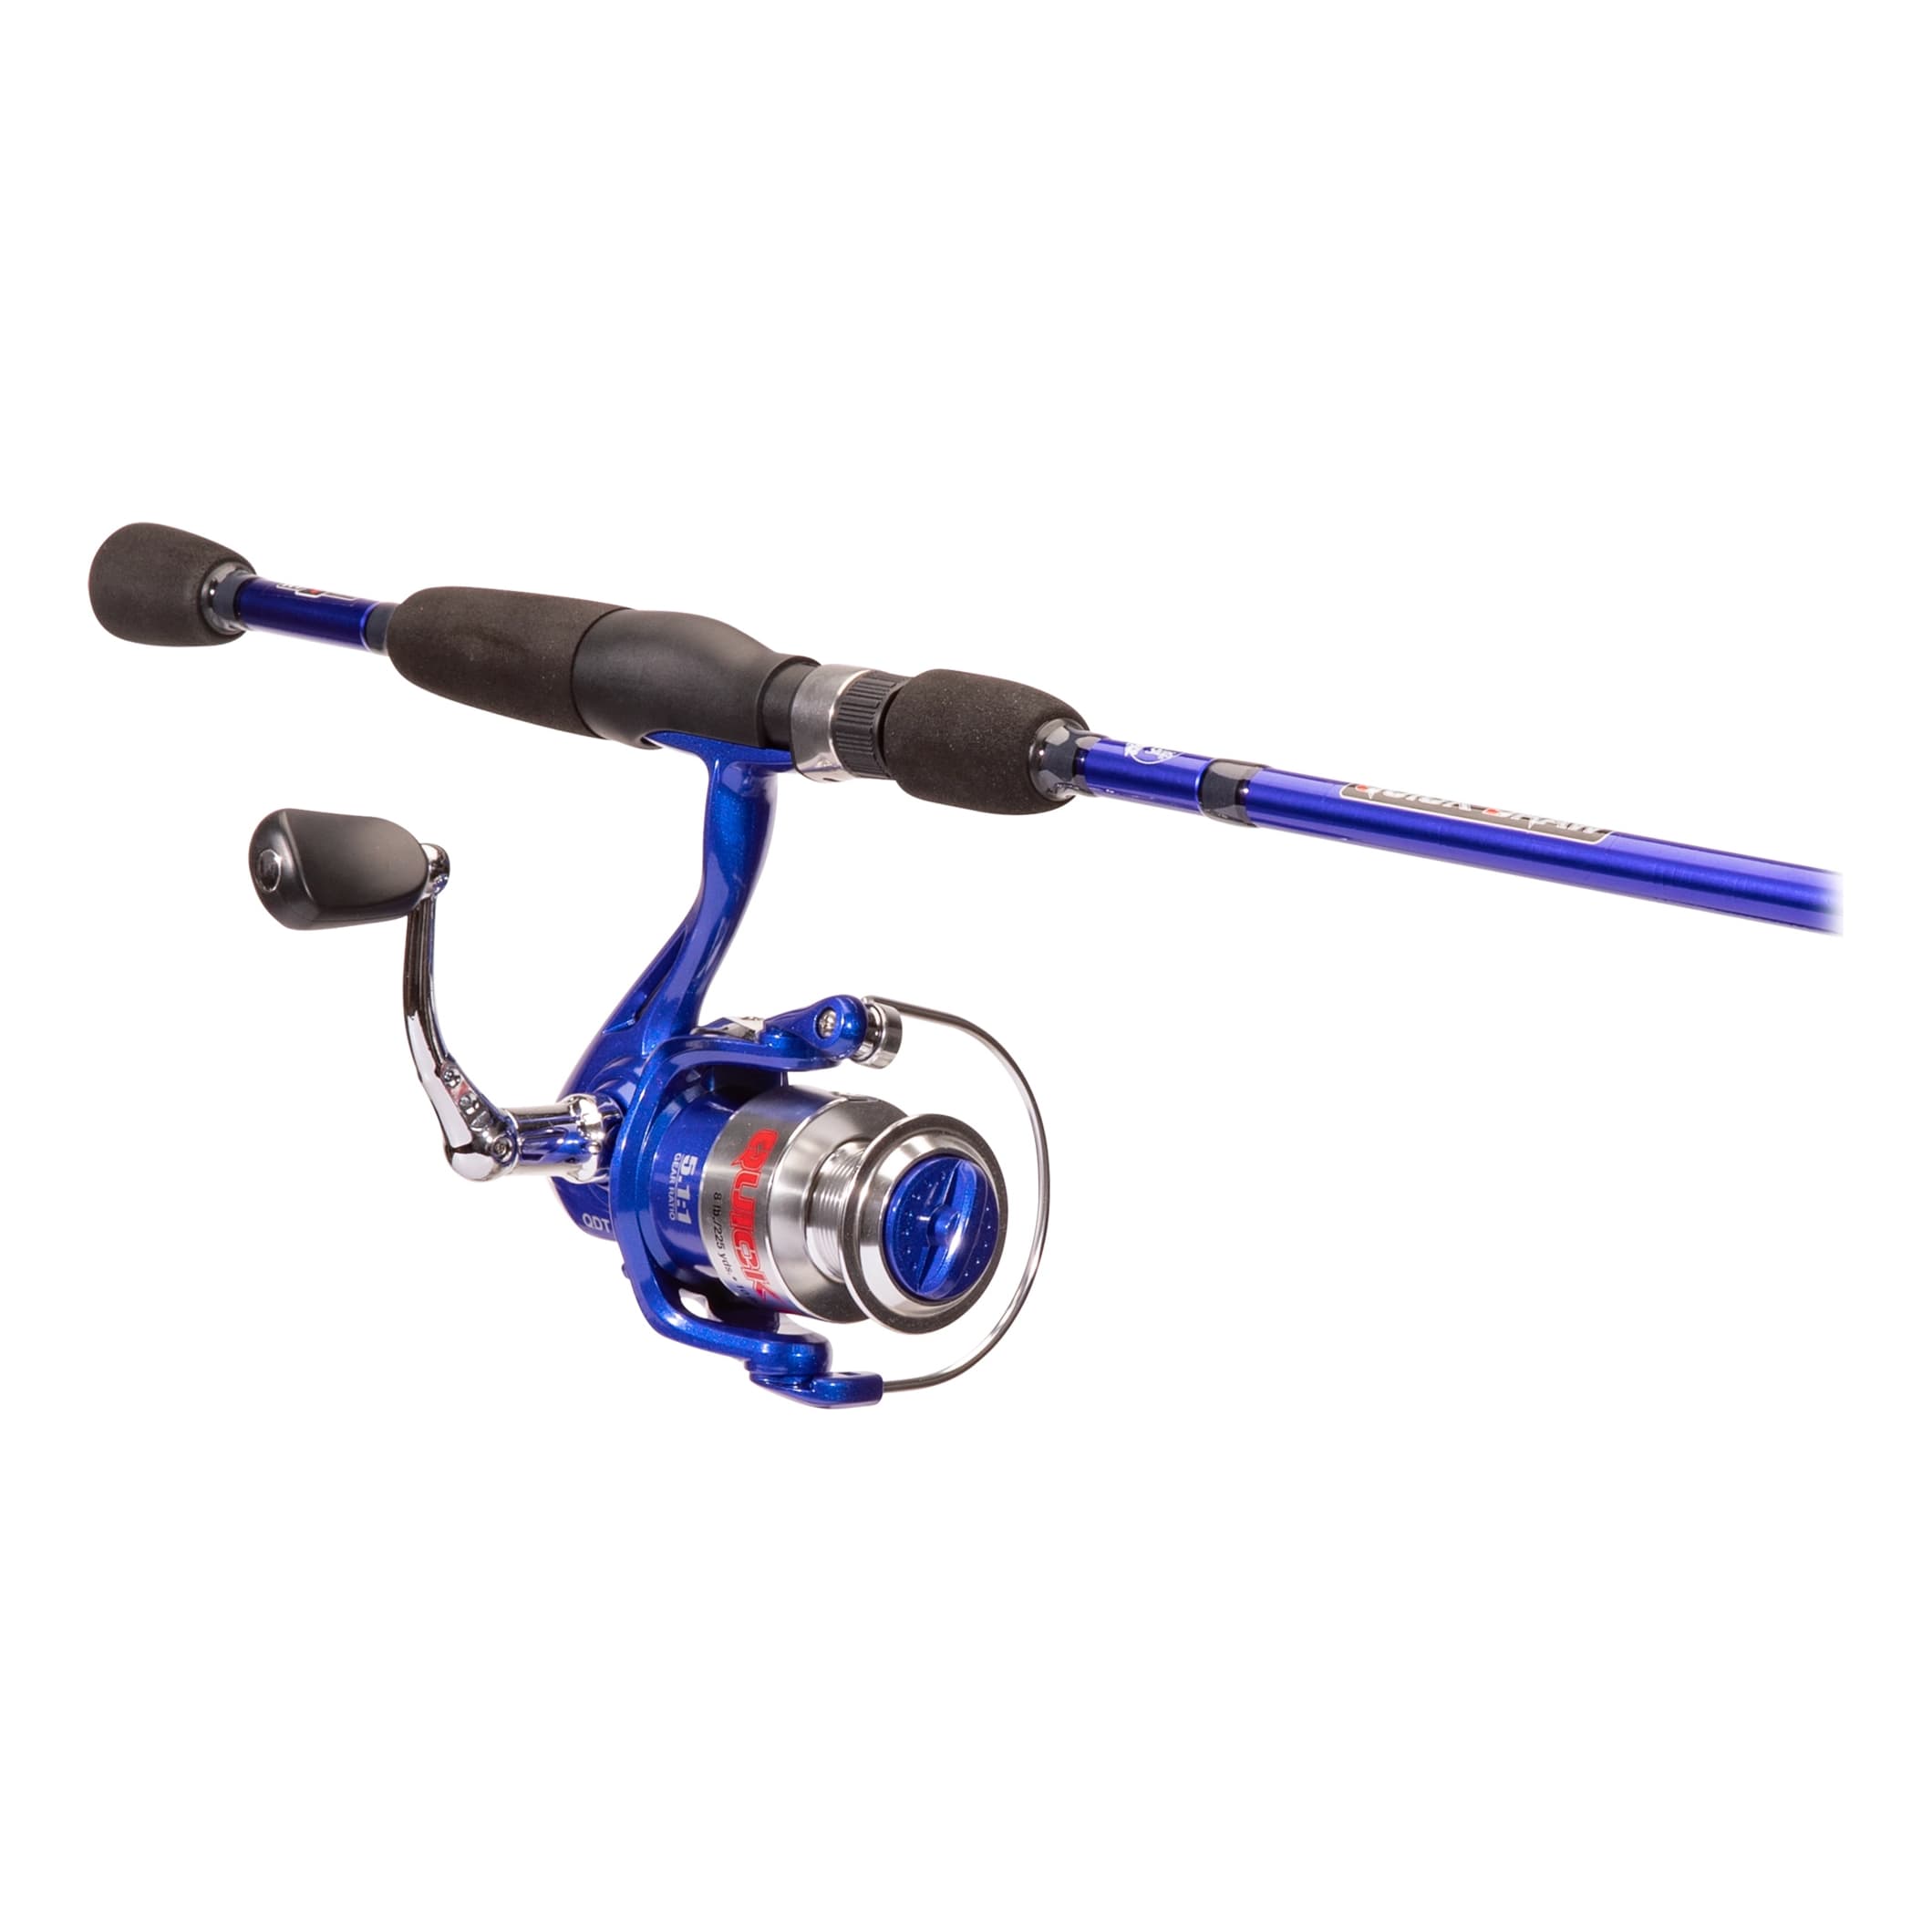 BassPro Fishing Gear